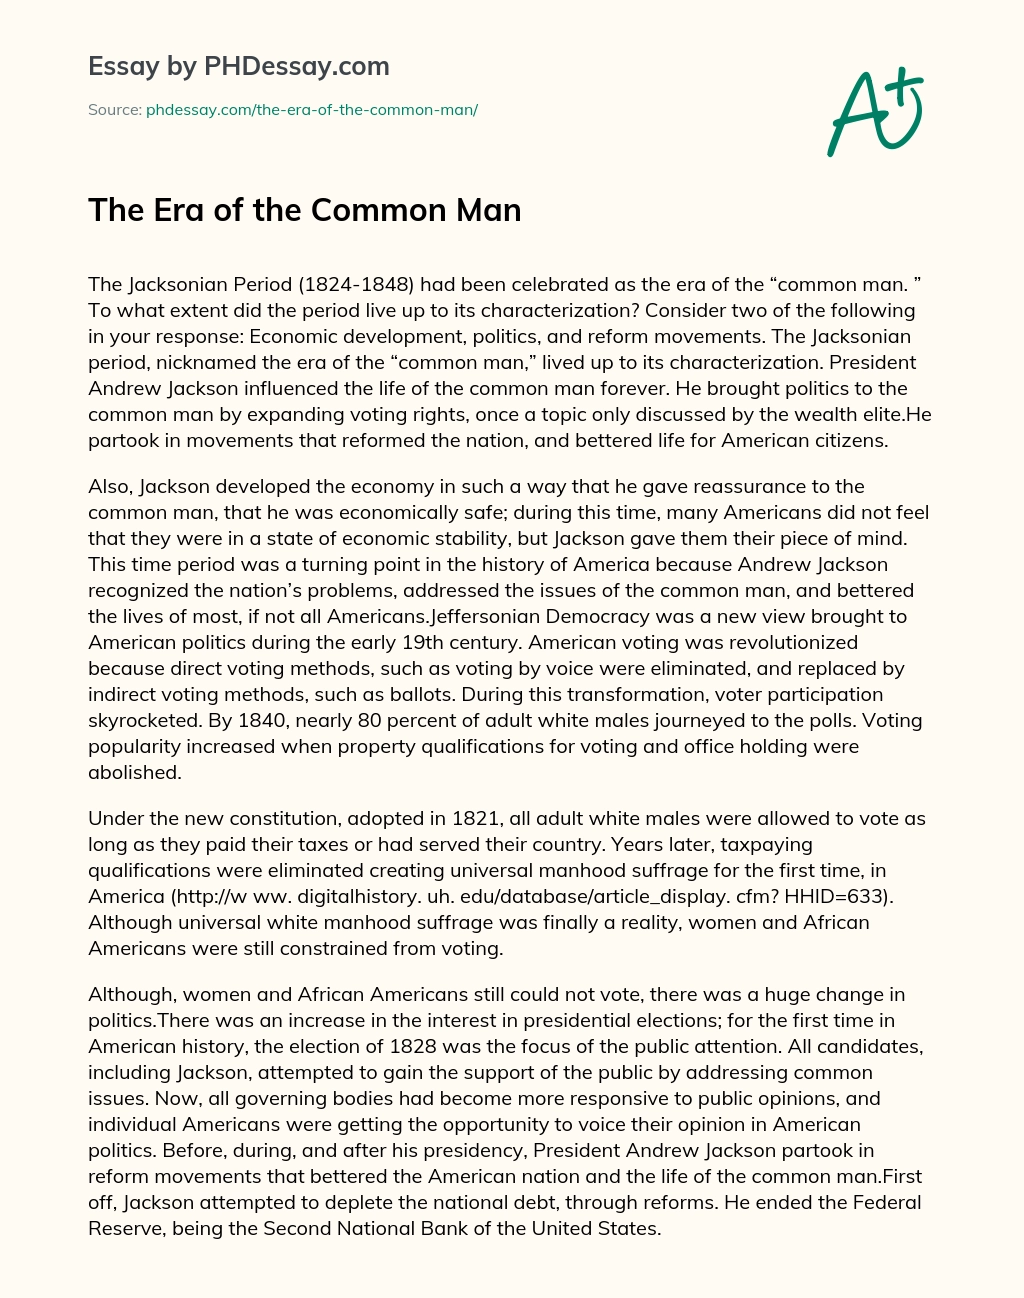 The Era of the Common Man essay